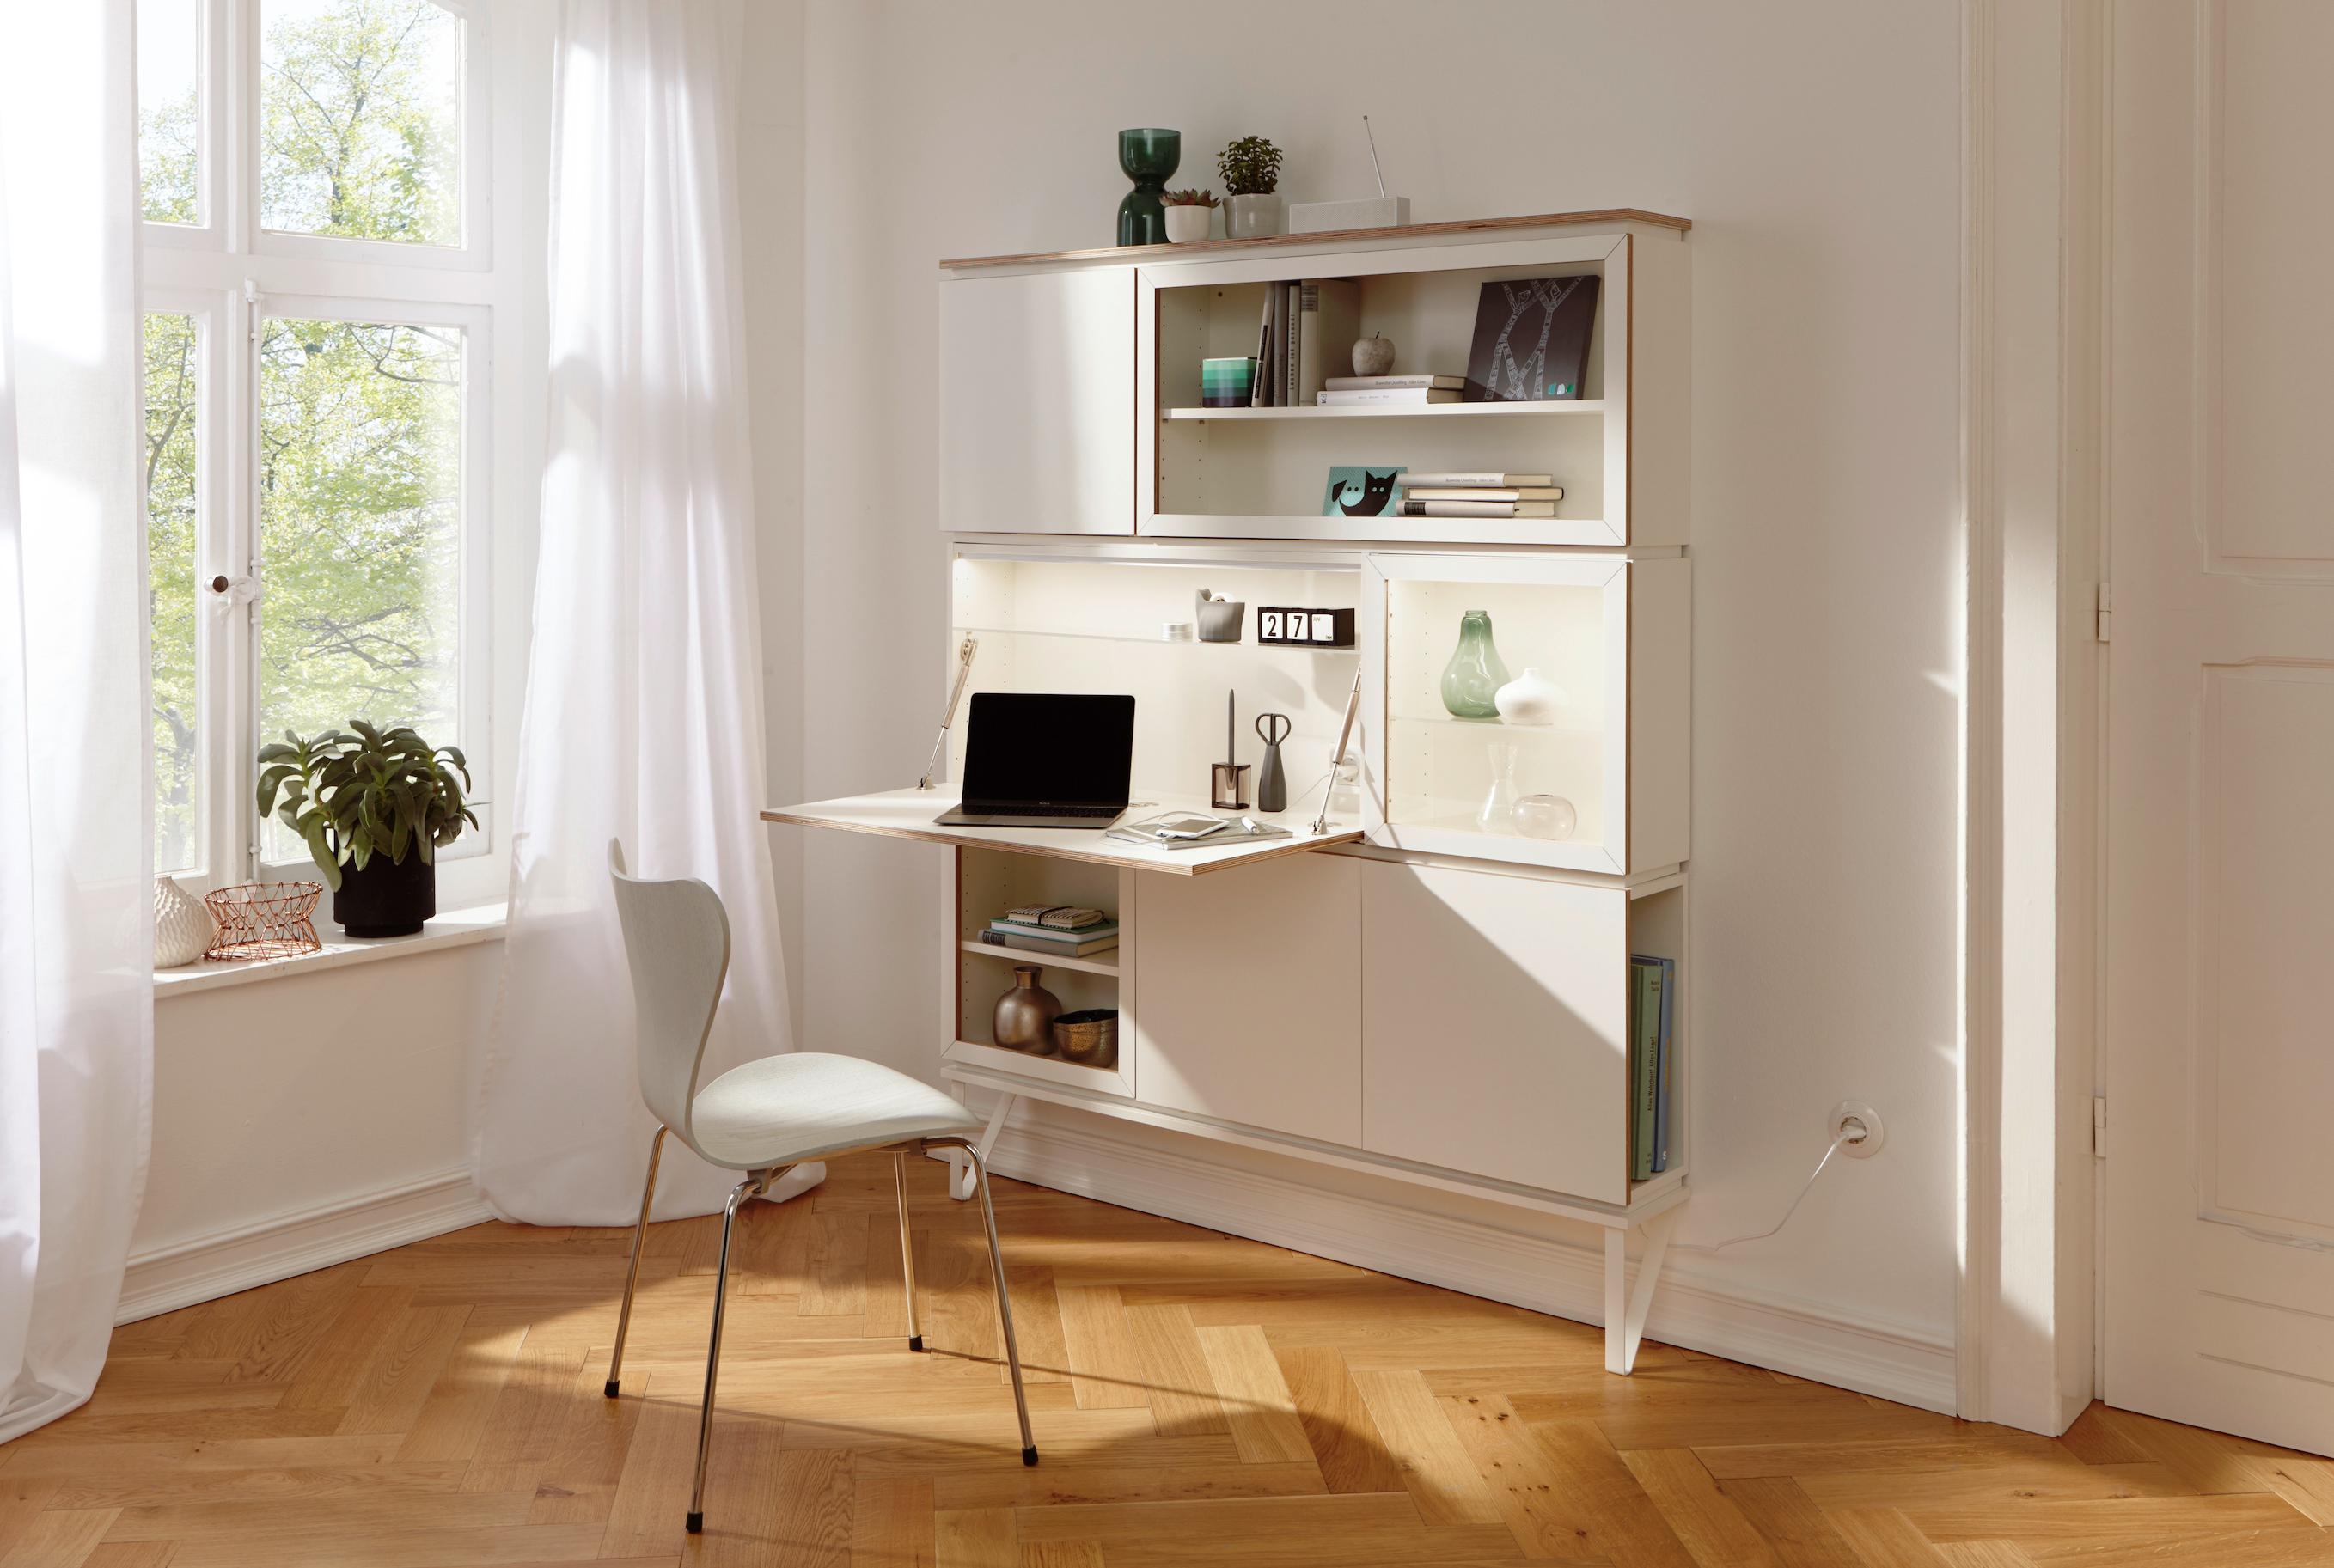 setup: Der Wohnbaukasten #sekretär ©www.michaelhilgers.de